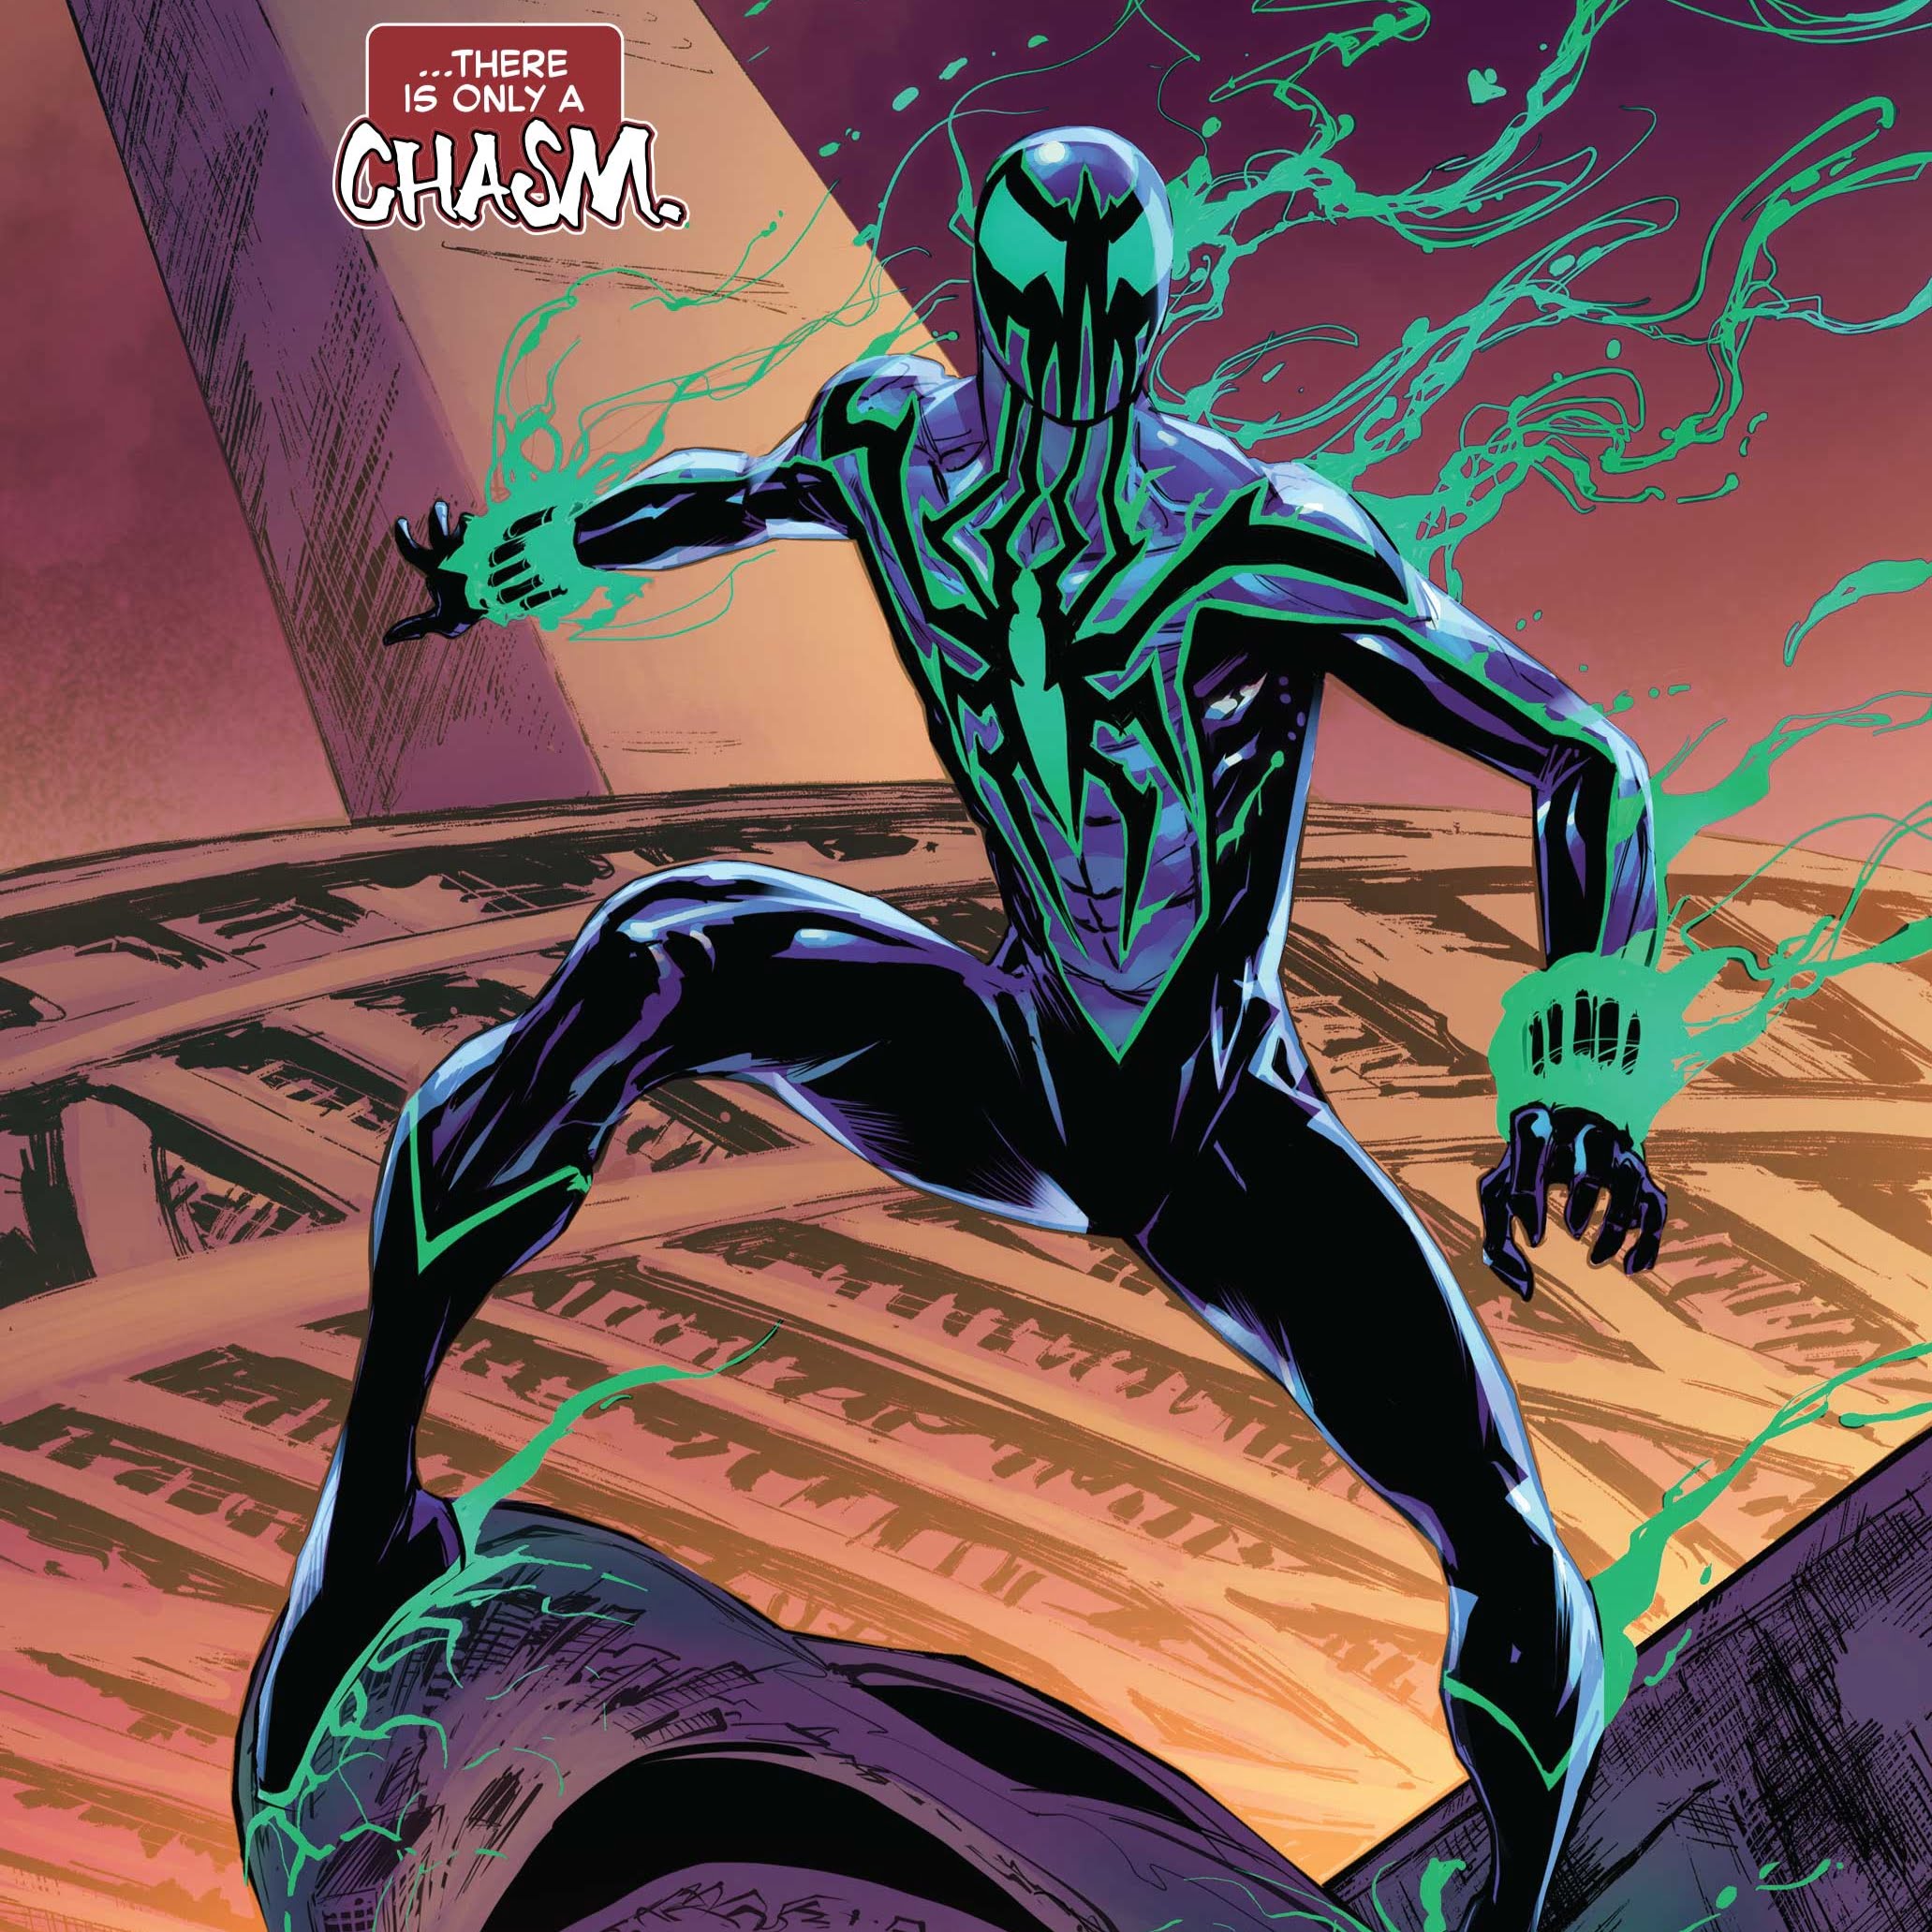 Amazing Spider-Man #93 via Arthur Adams and Alejandro Sanchez via Marvel Comics for use by 360 Magazine